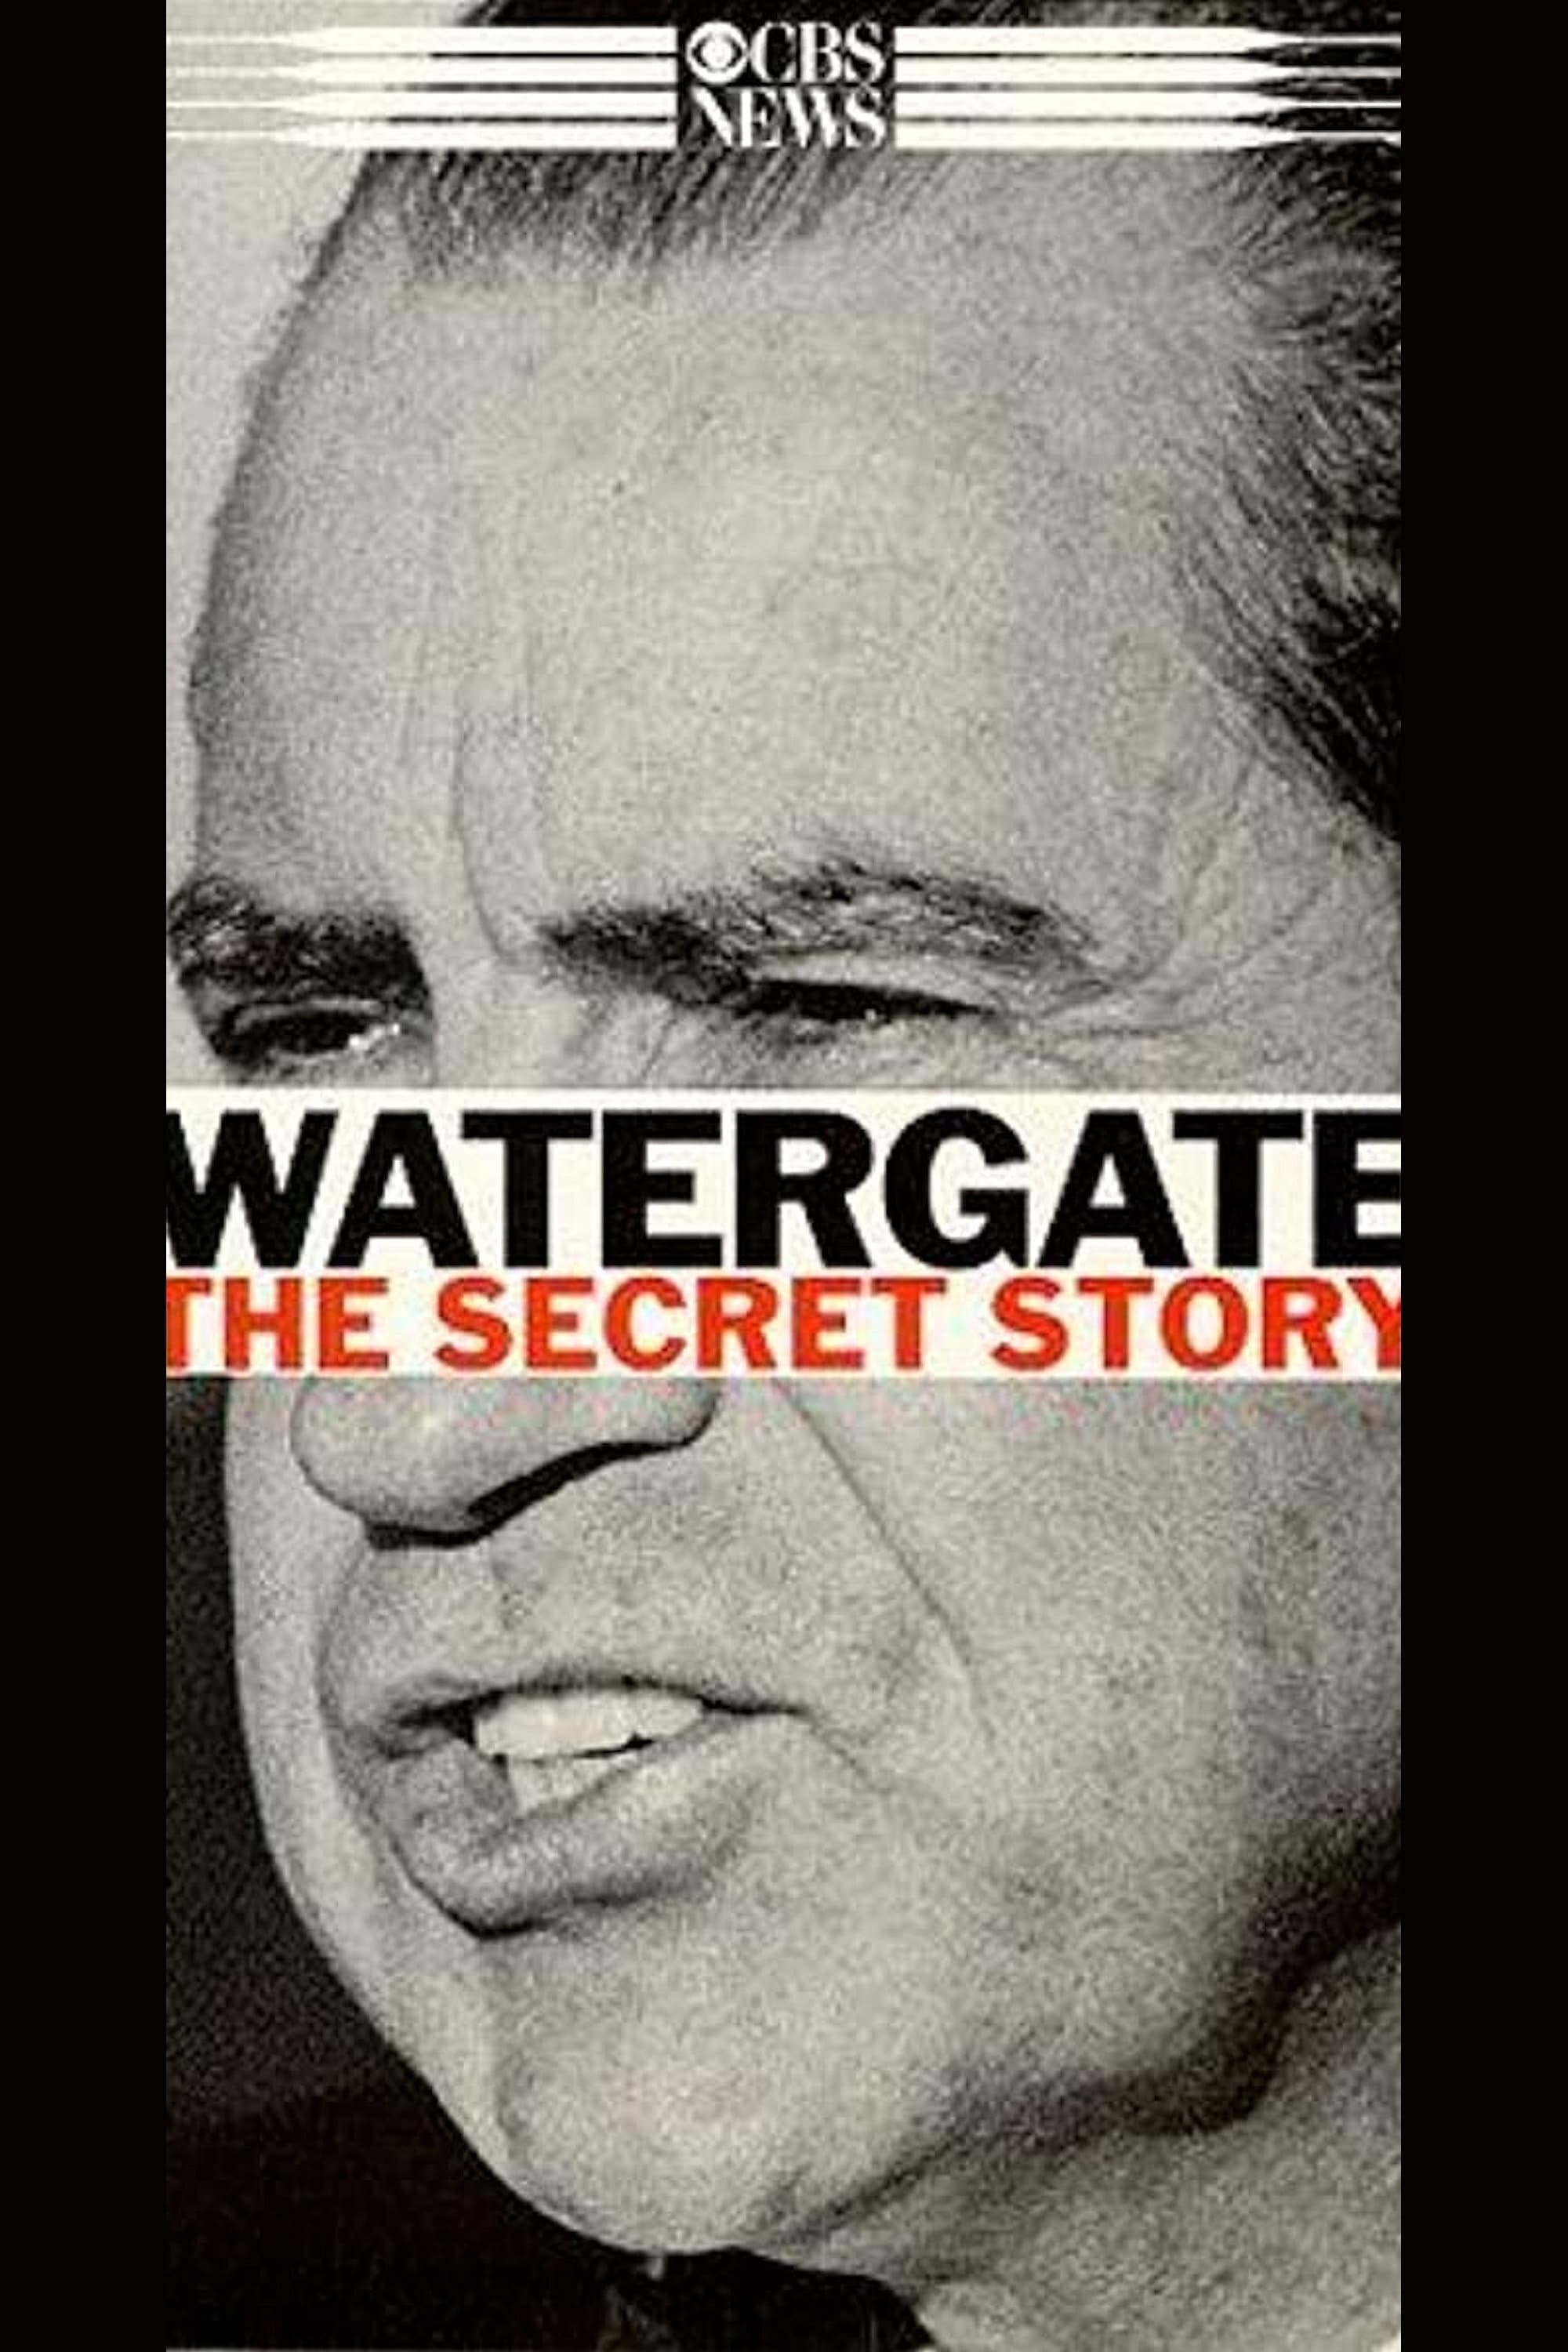 Watergate: The Secret Story